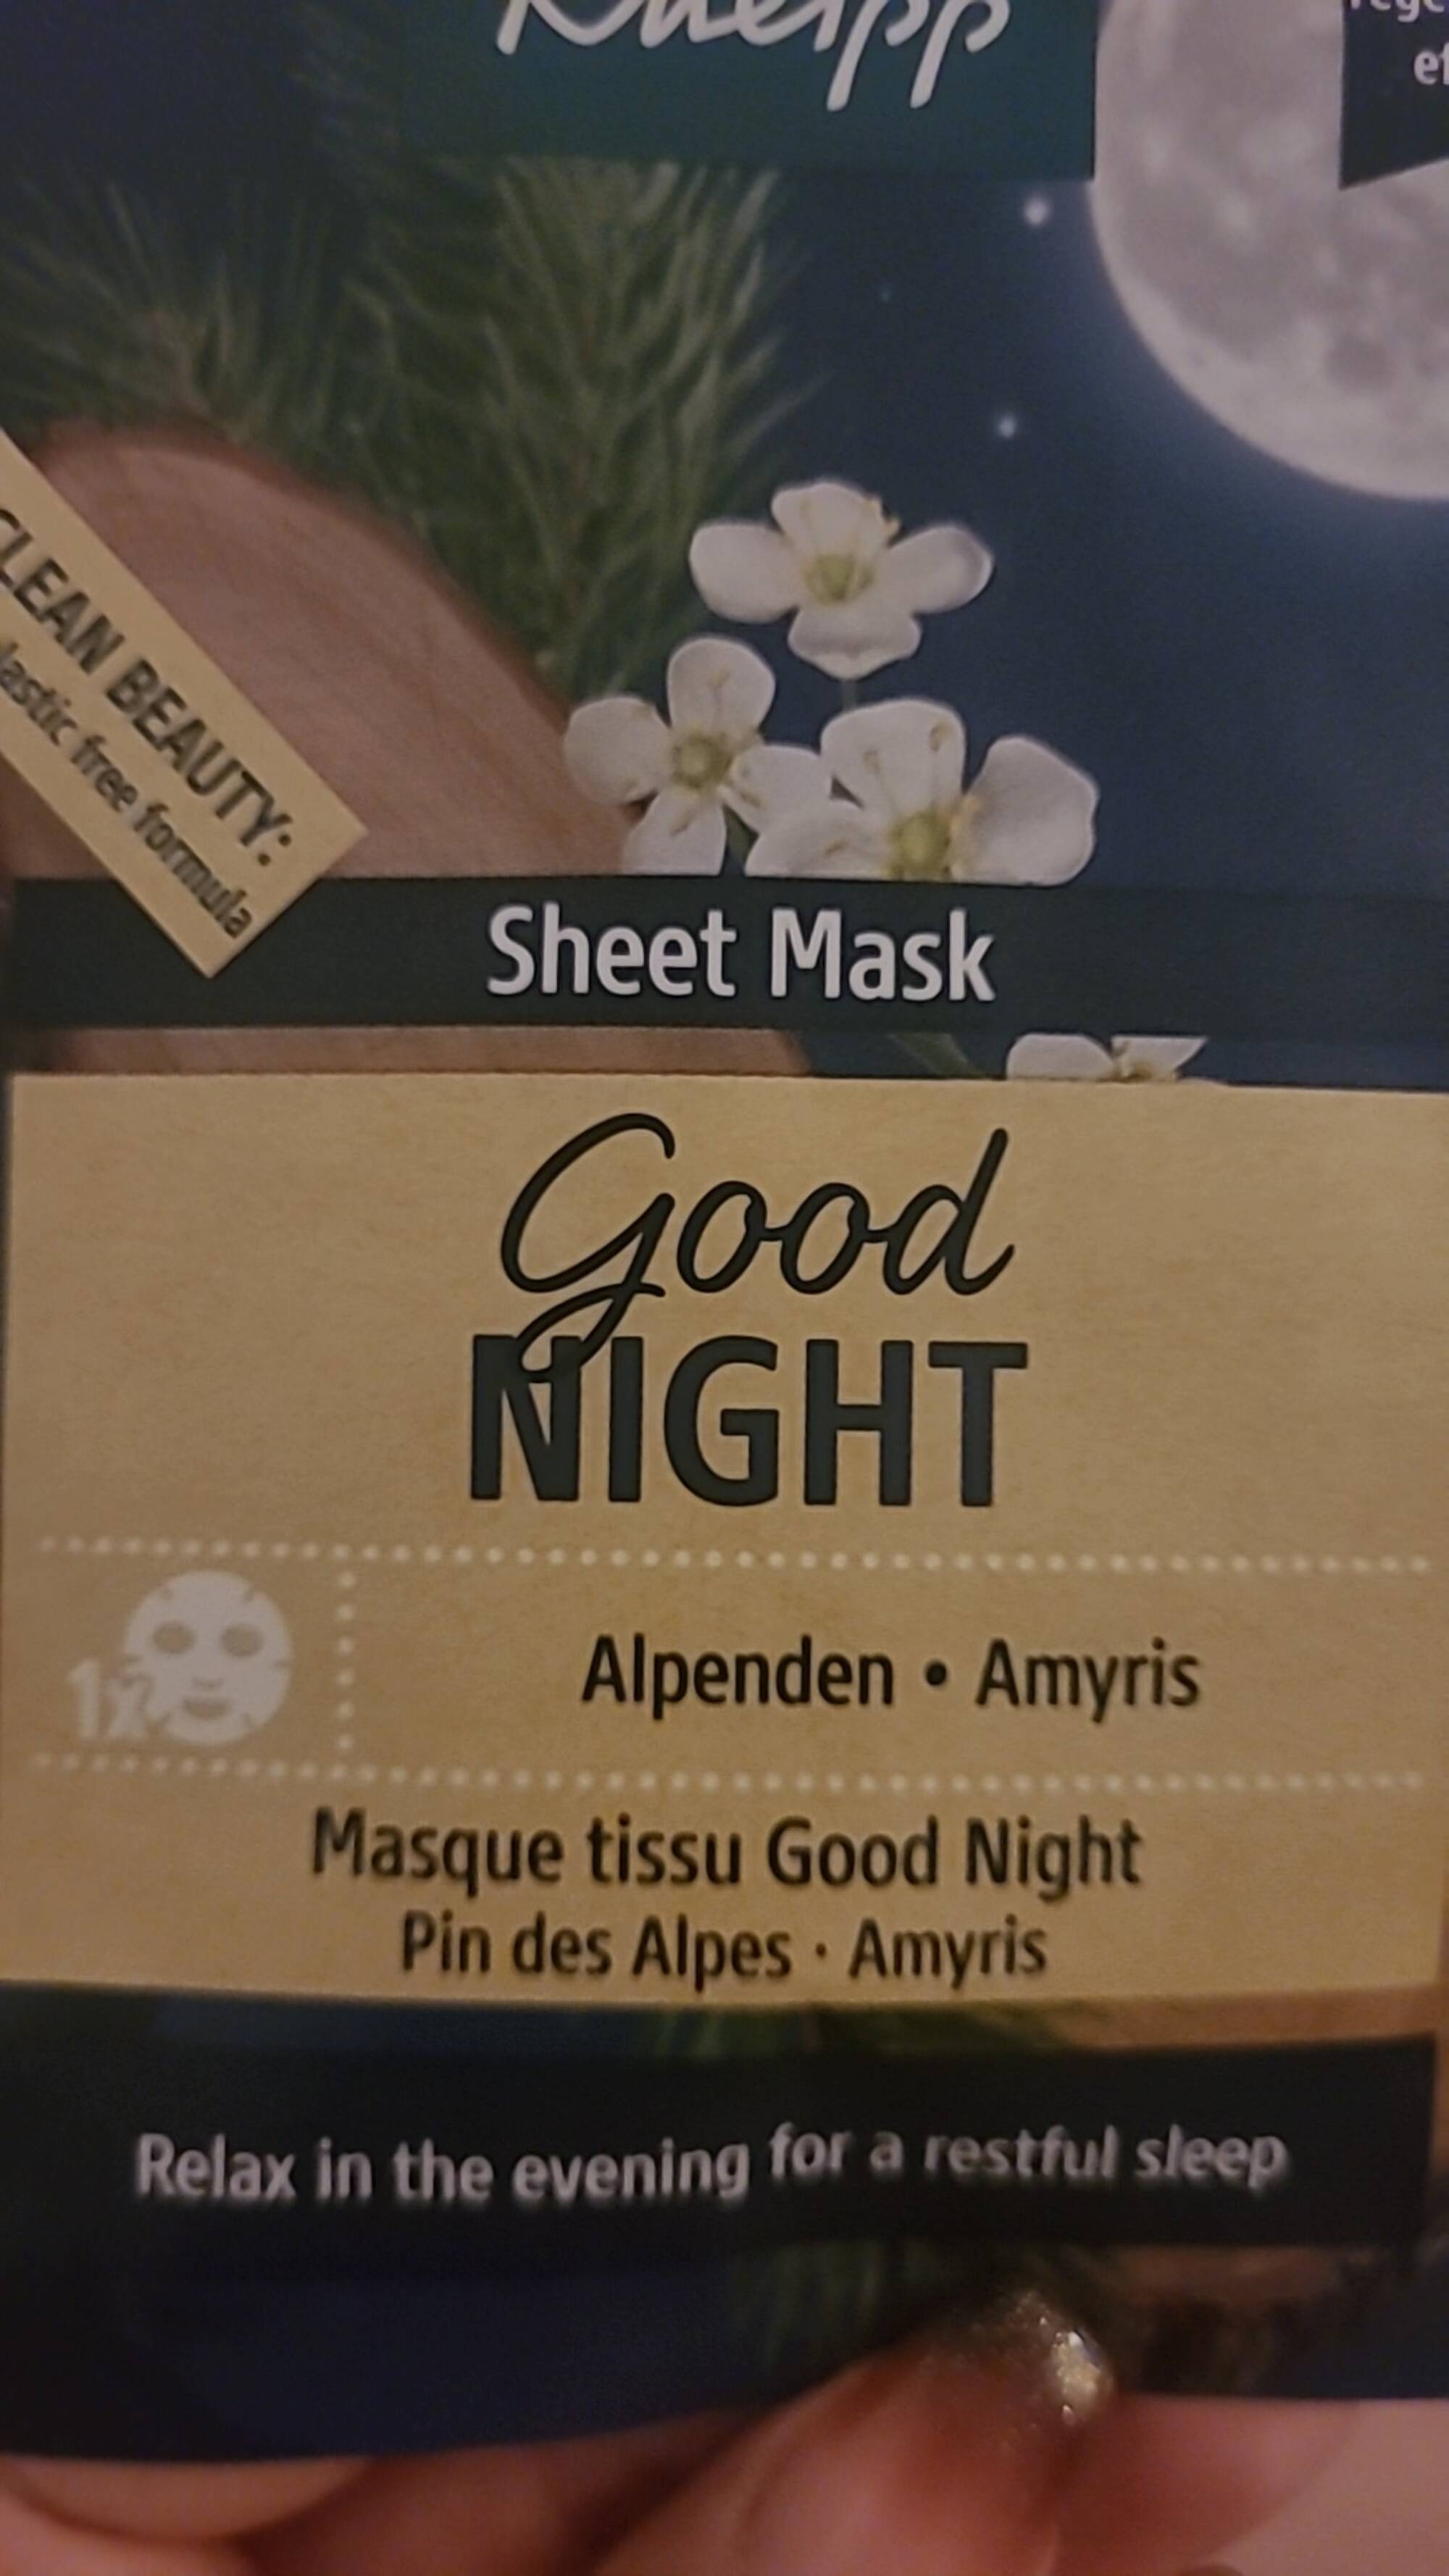 KNEIPP - Good night - Sheet mask